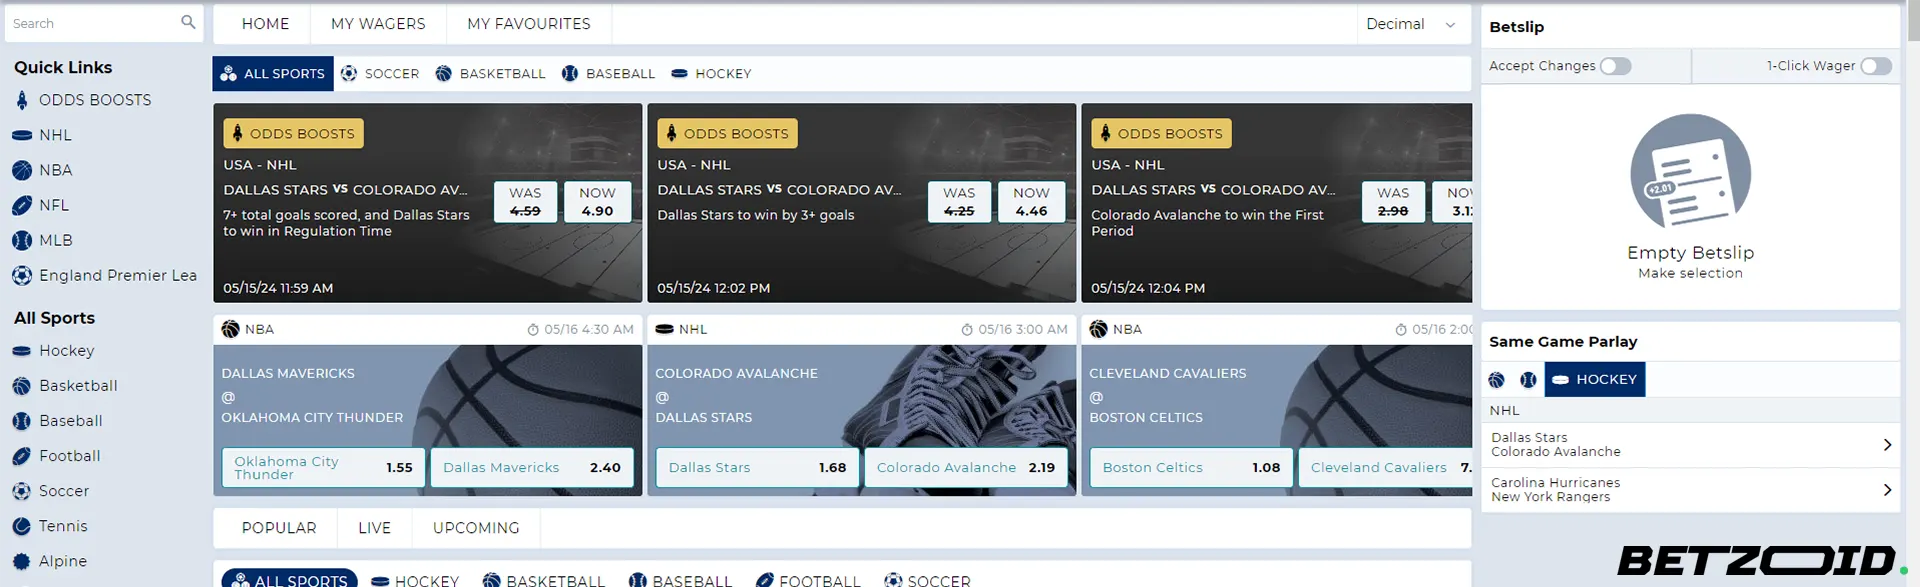 Play Alberta sports betting interface.